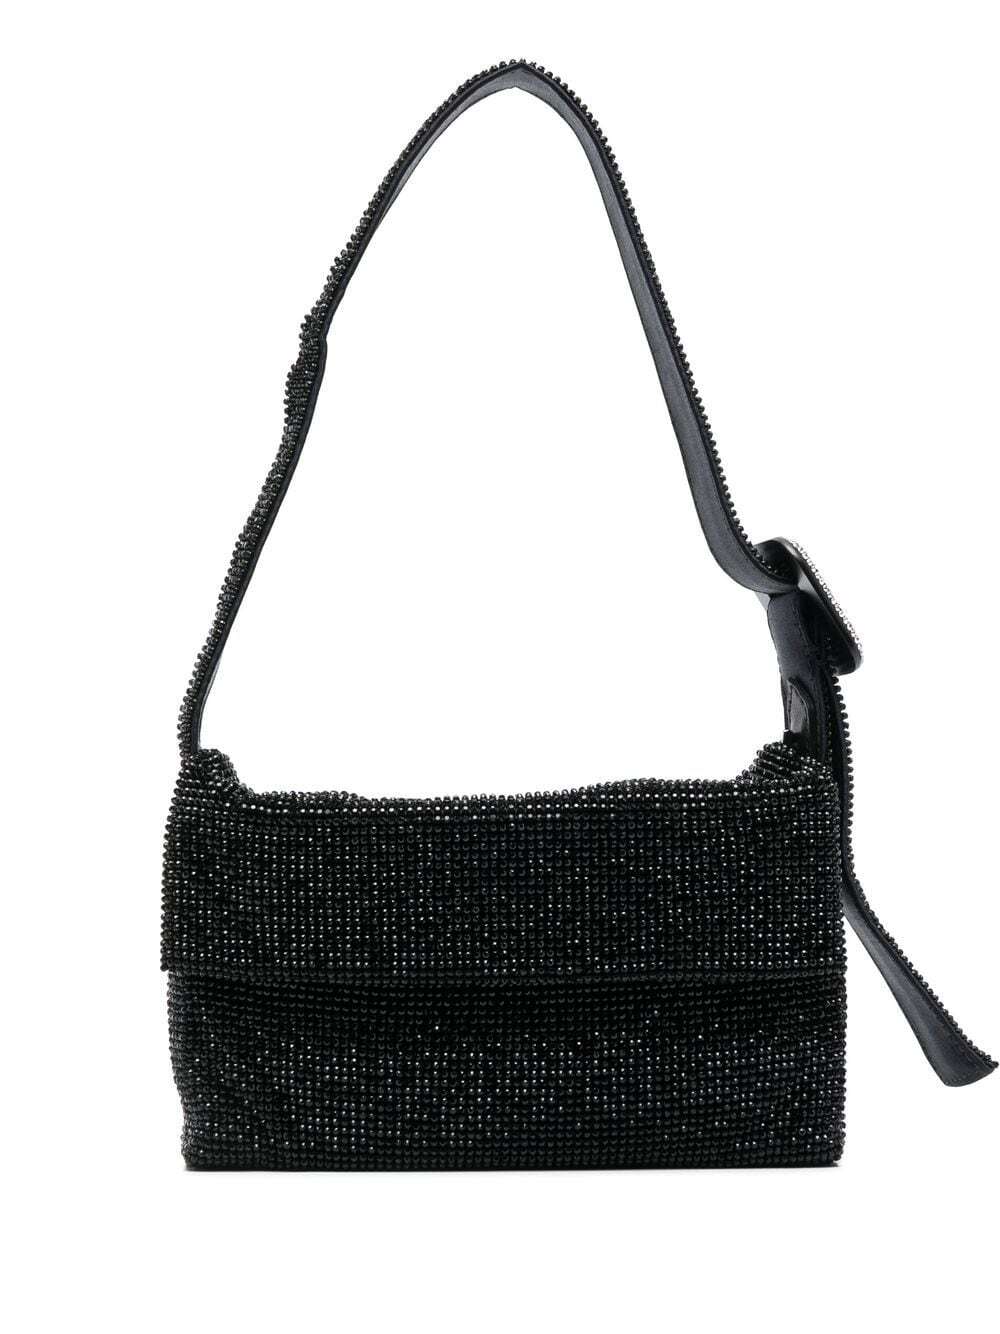 Benedetta Bruzziches crystal-embellished clutch bag - Black